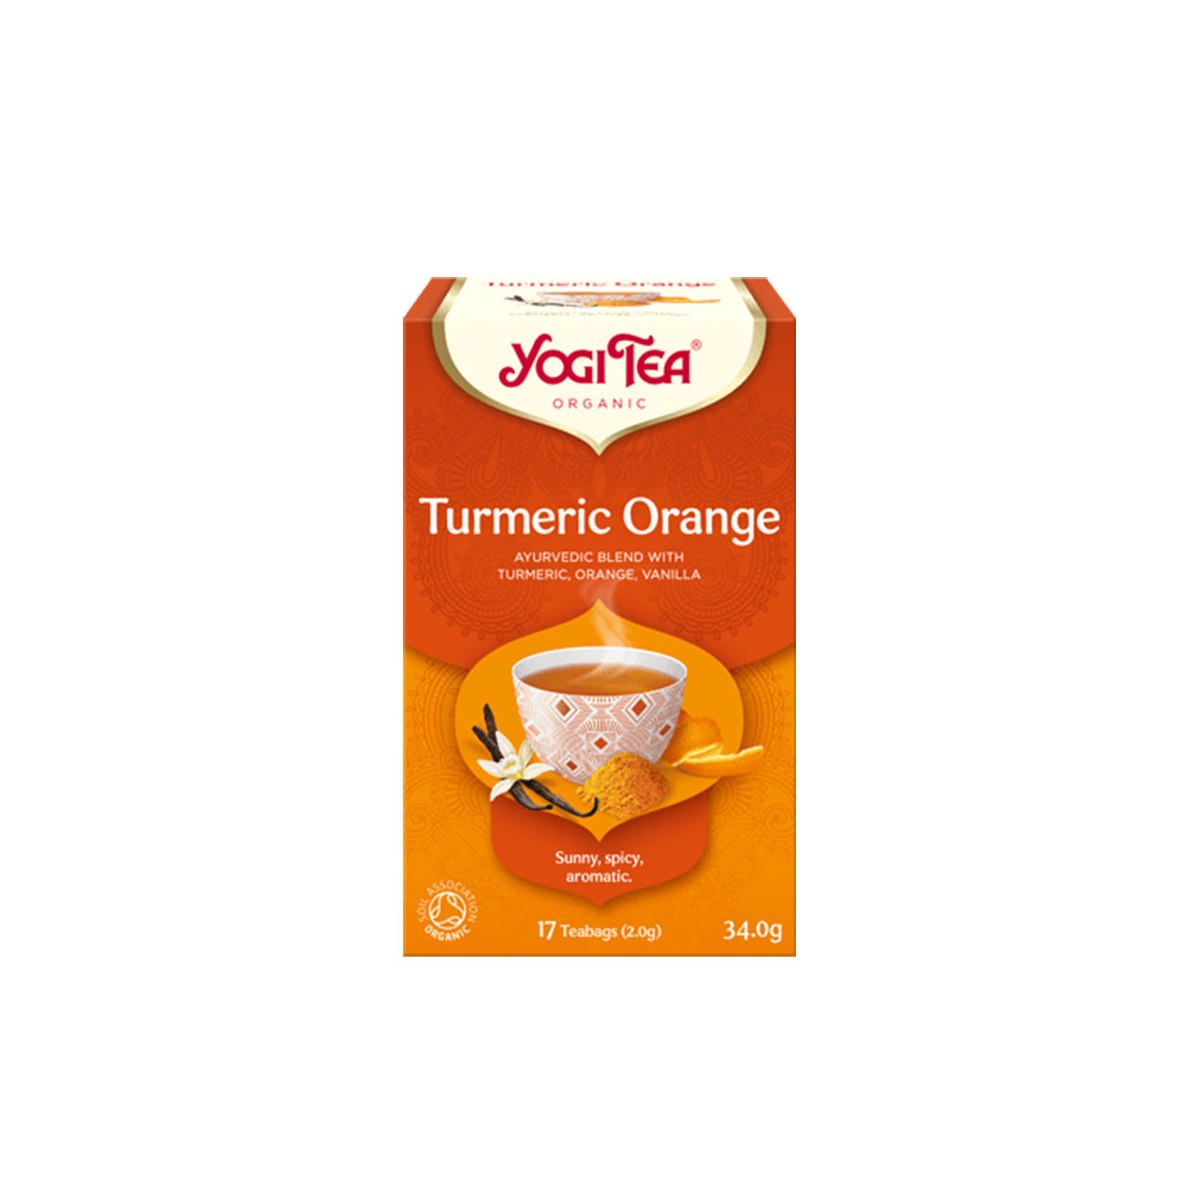 Yogi Tea Turmeric Orange 17 bags 34.0g